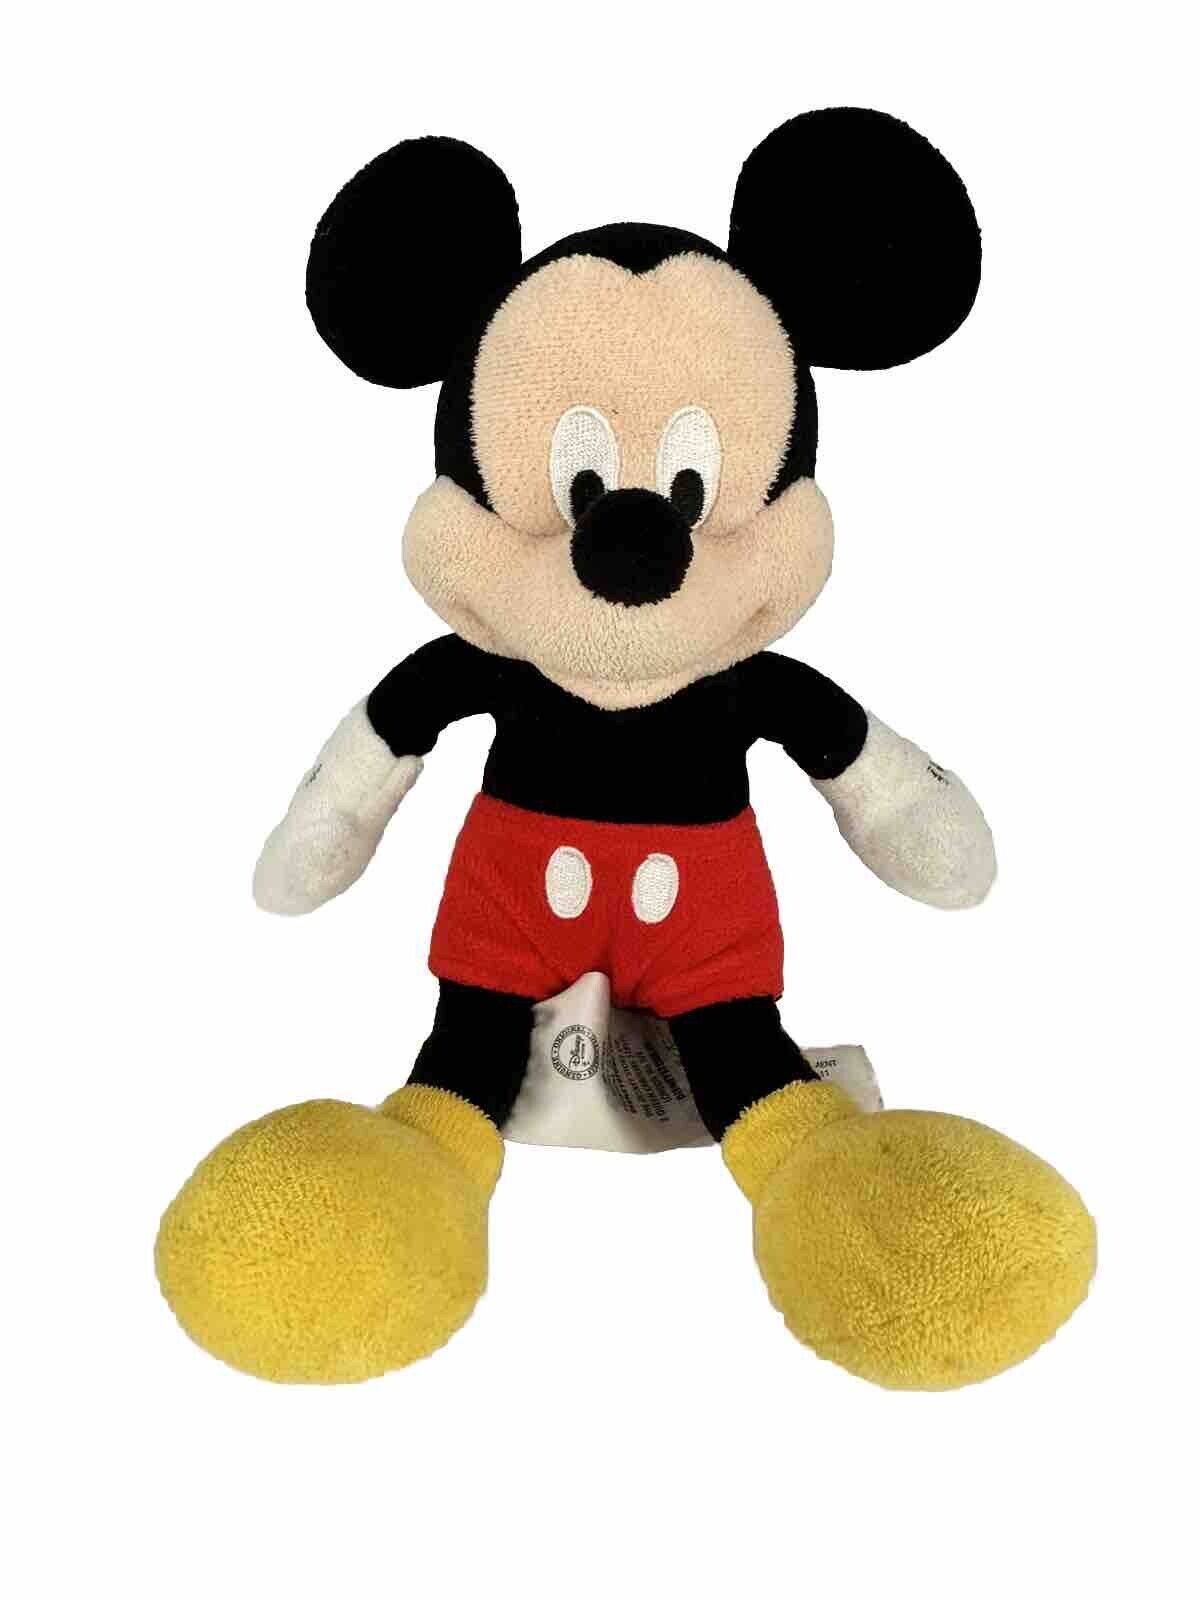 Disney Store Mickey Mouse Mini Bean Bag Plush 9” Stuffed Animal Toy